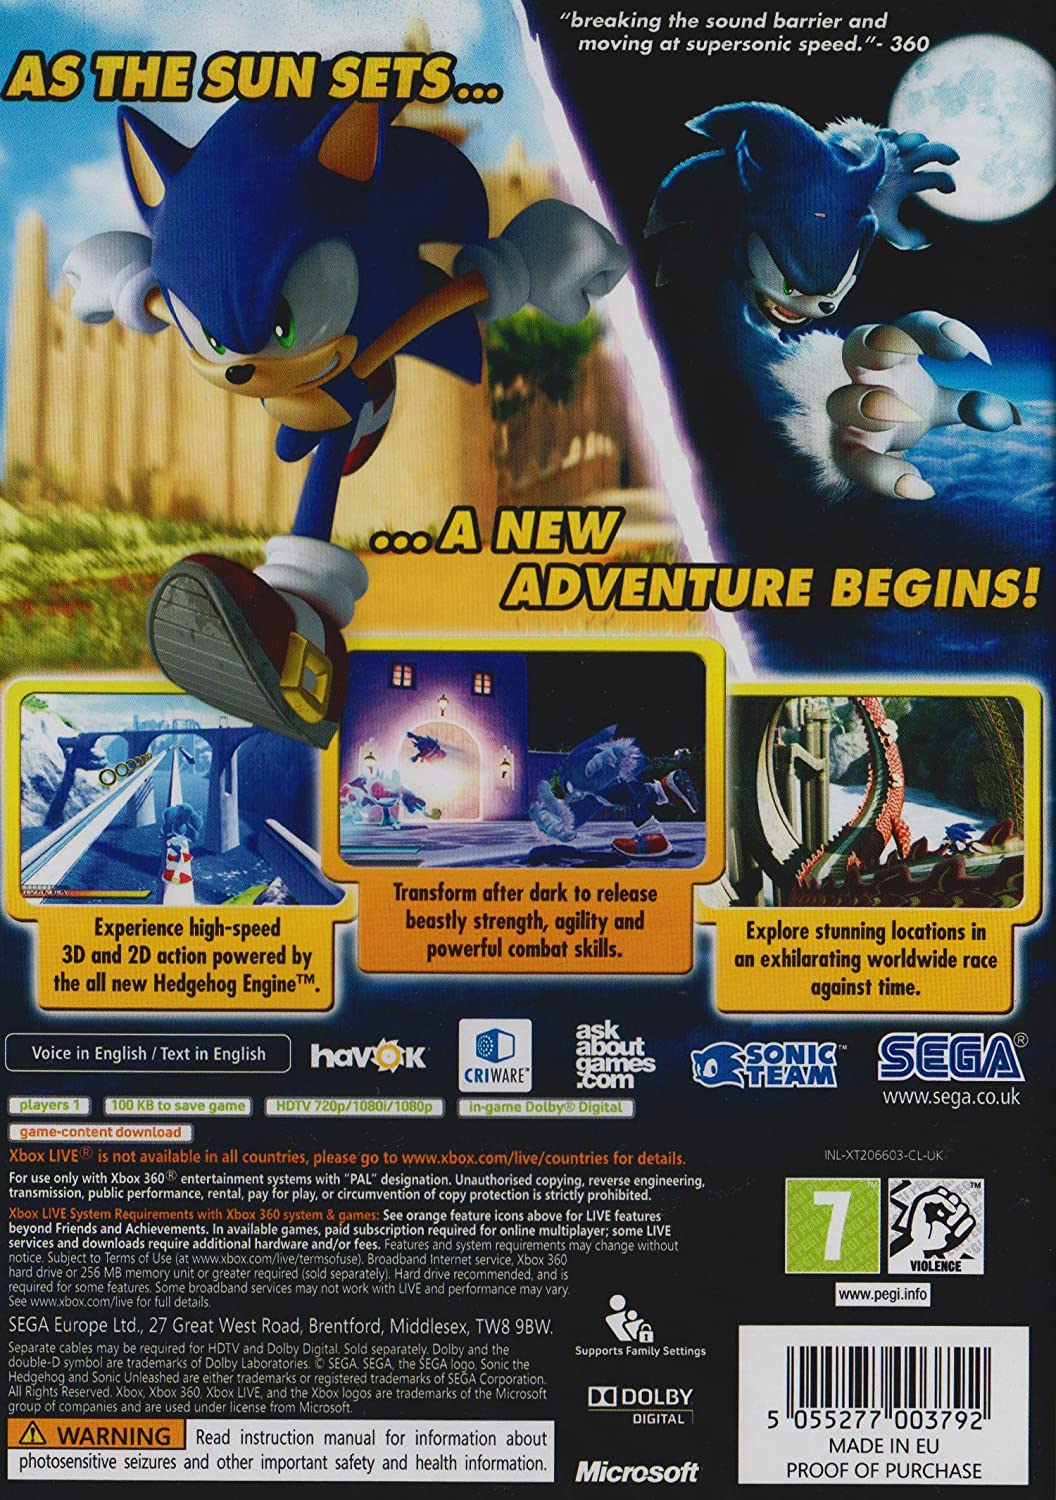 Sonic Unleashed - Classics Edition (Xbox 360) 